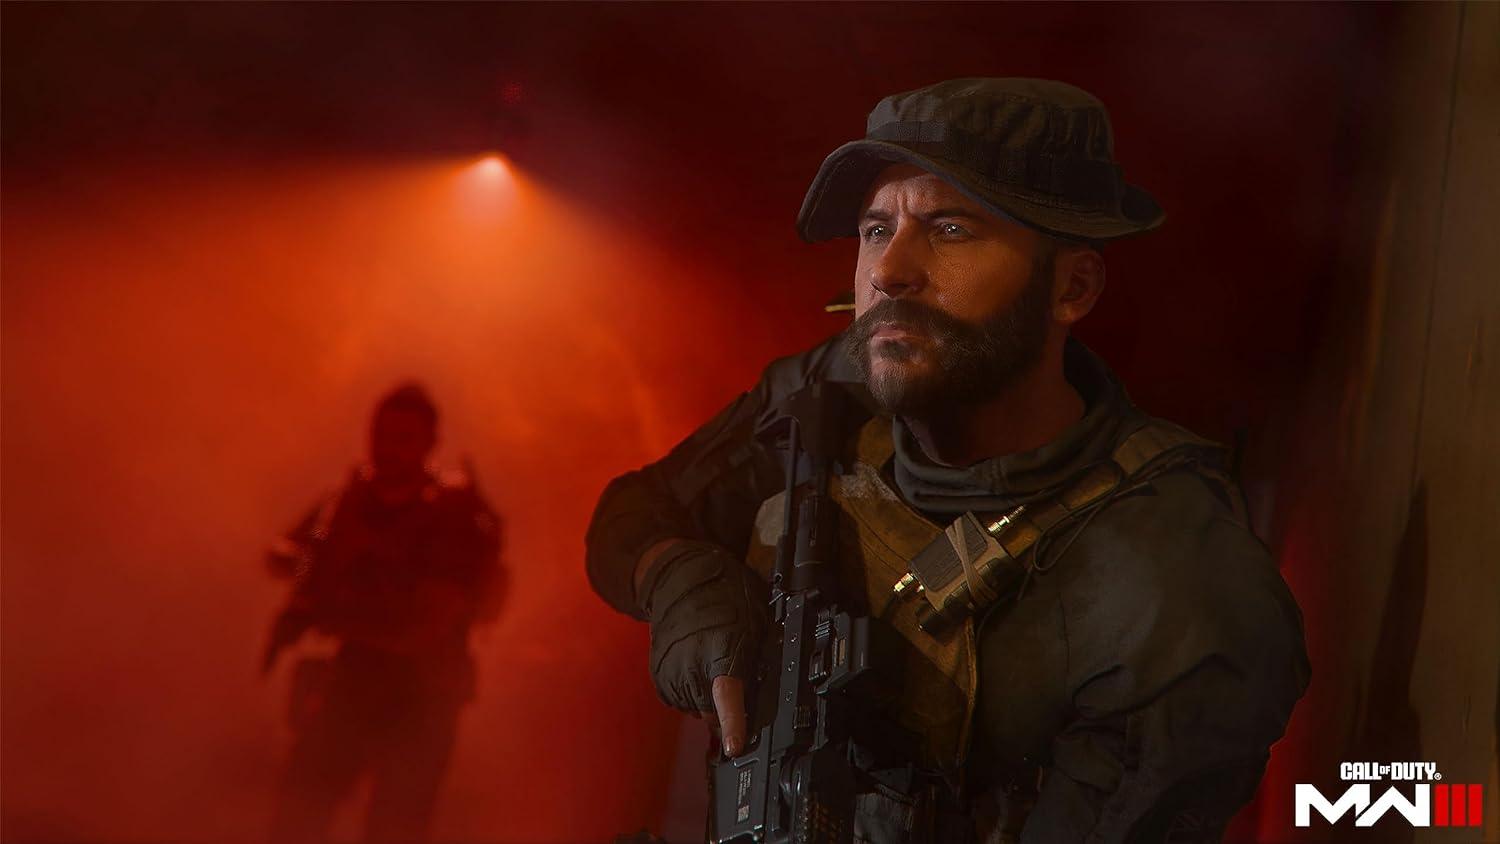 XBOX - Call of Duty: Modern Warfare III - Want a New Gadget